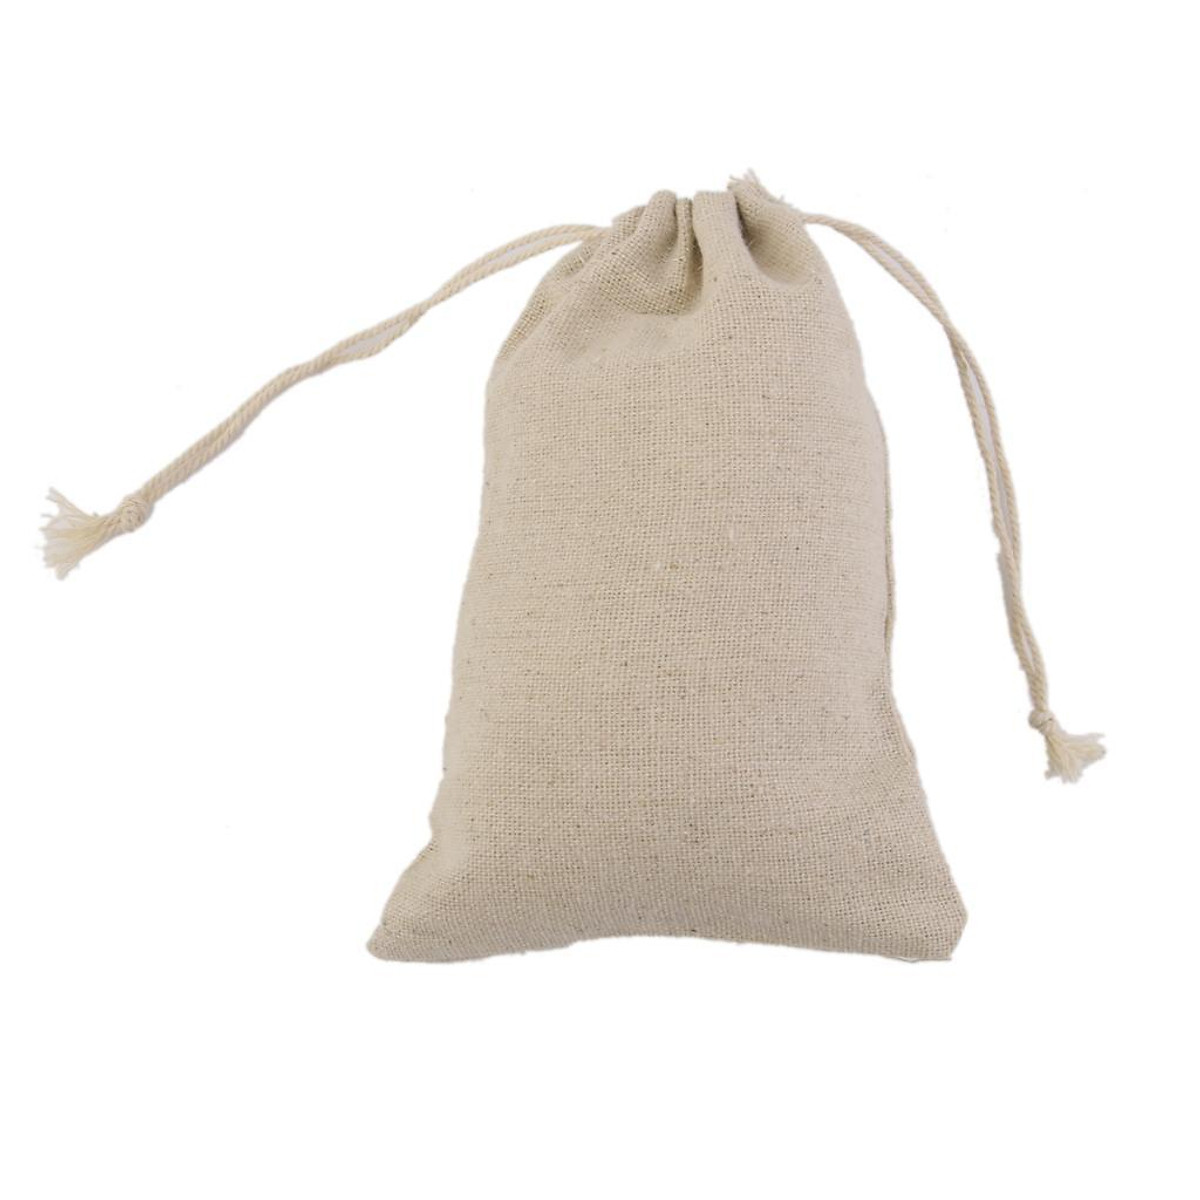 Amazon.com: 25PCS Burlap Gift Bags With Drawstring, 6.7X9.1